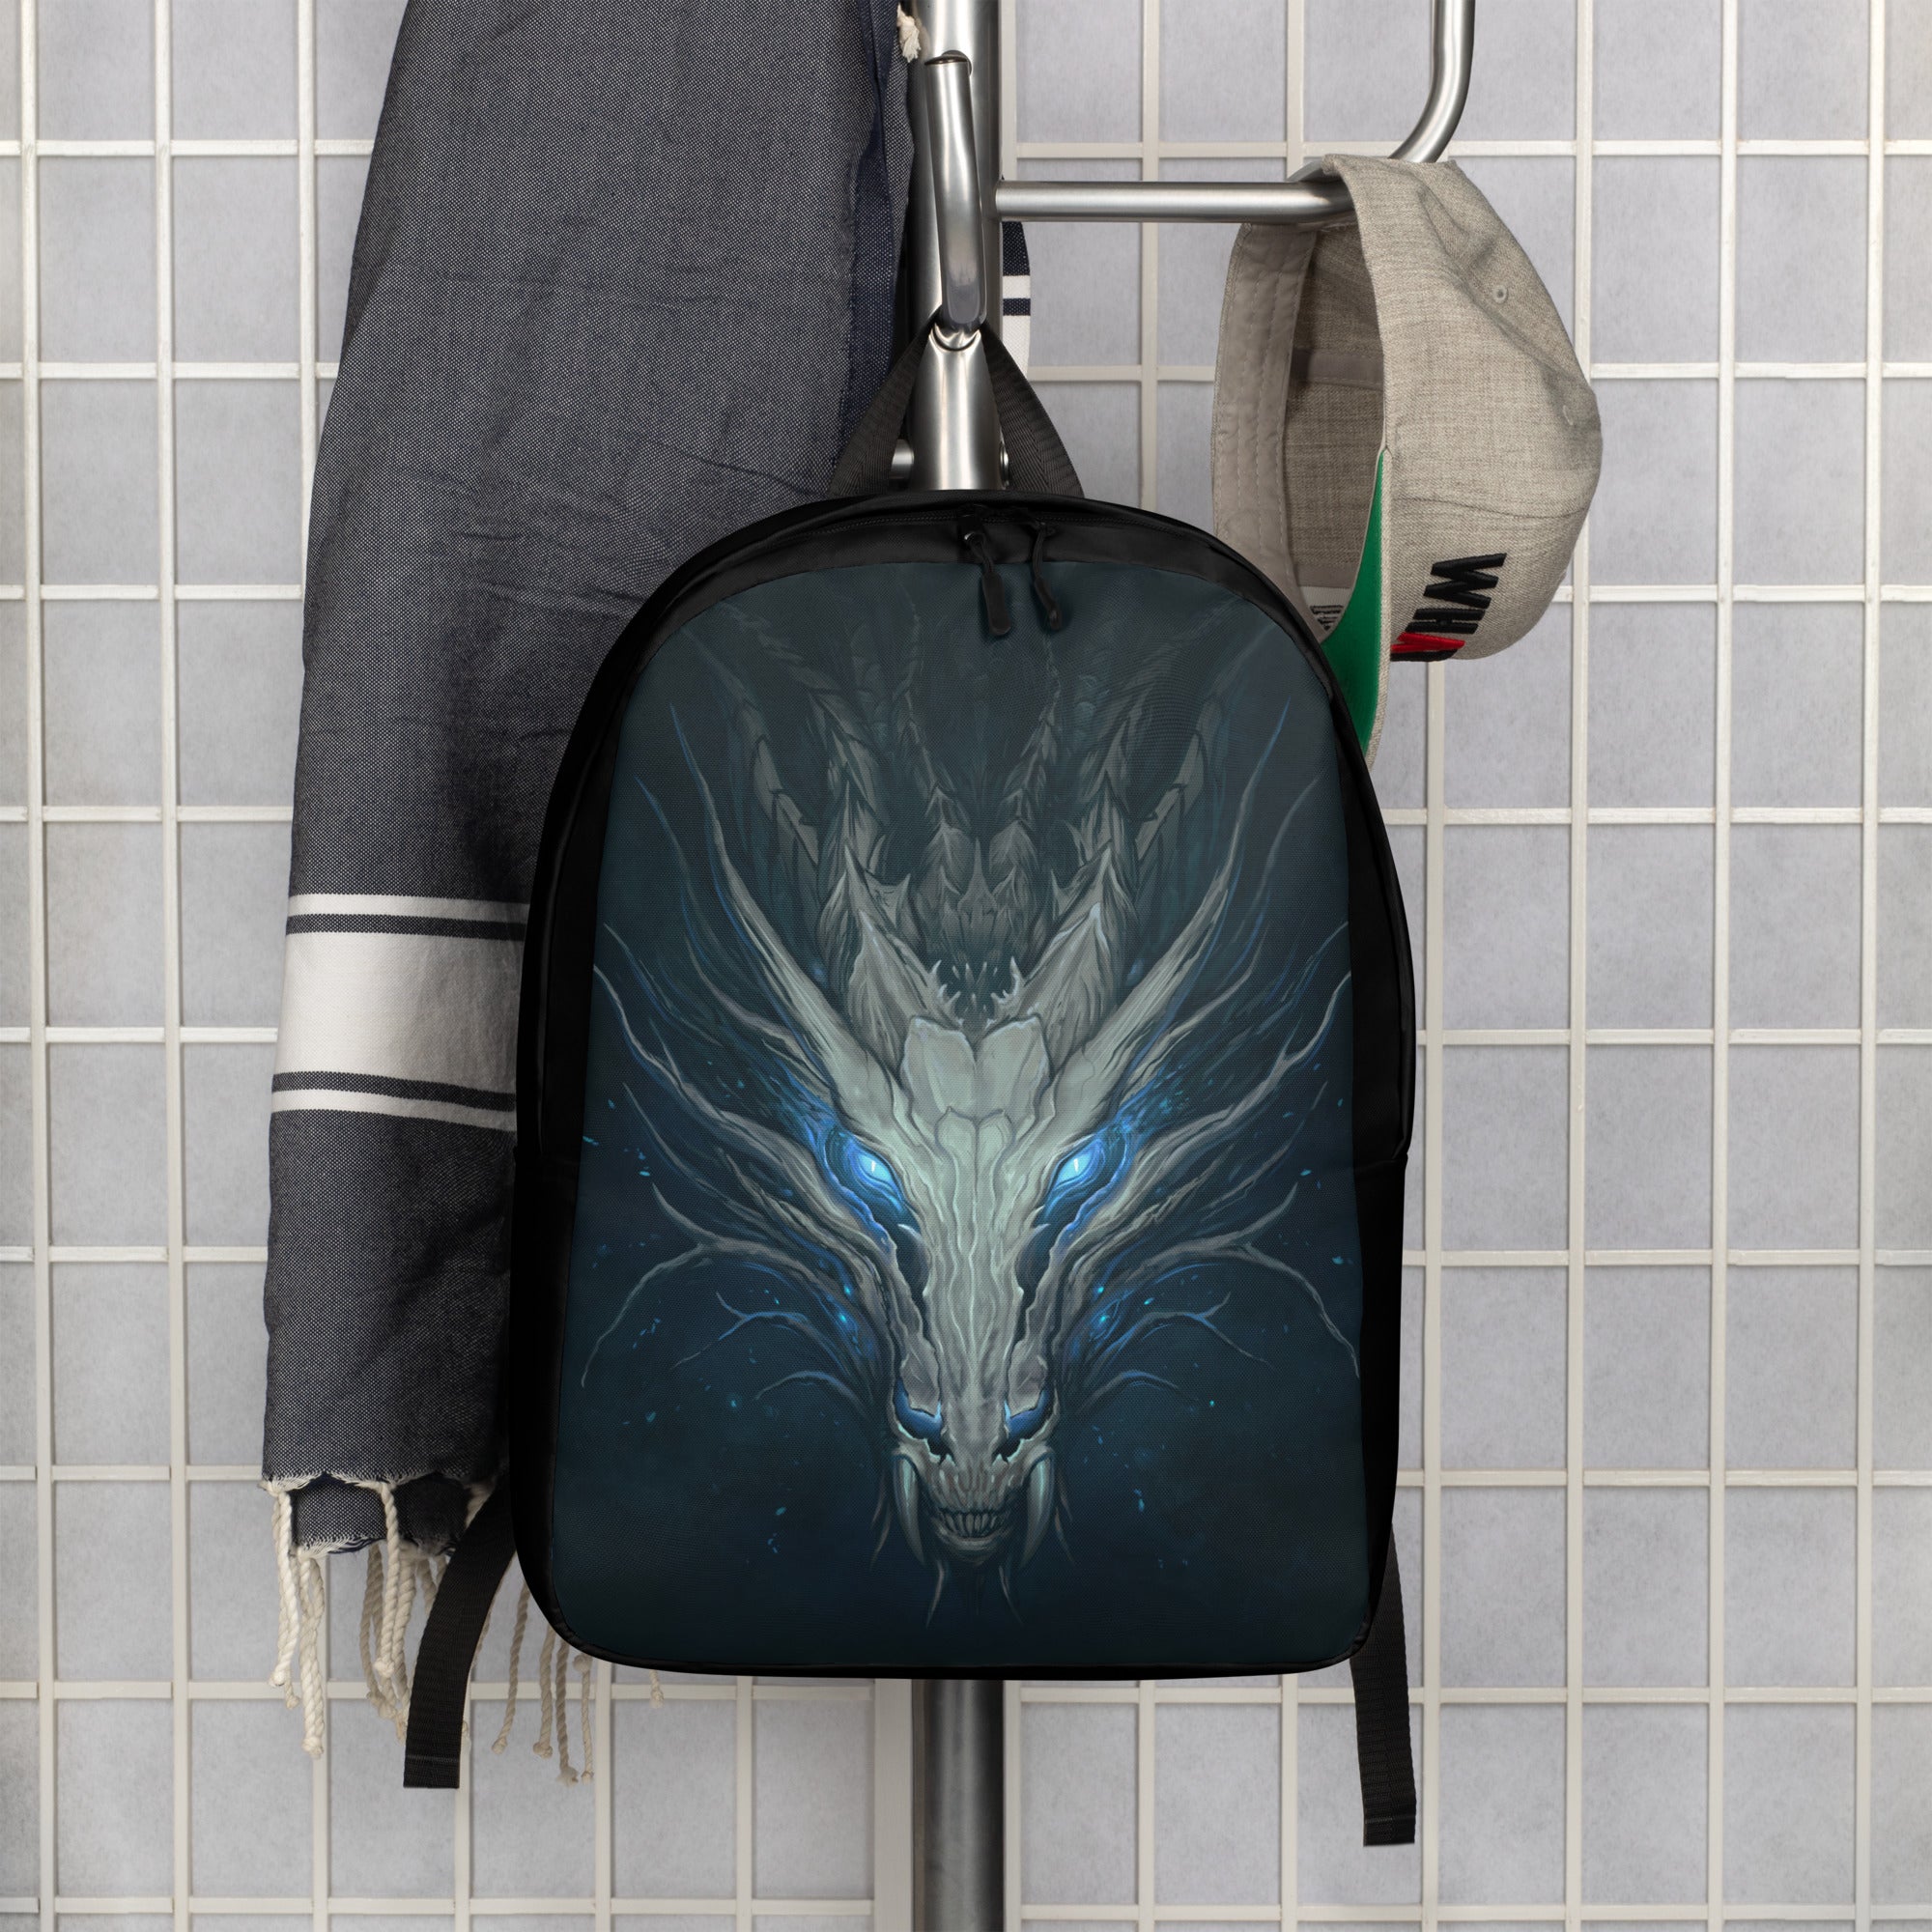 Blue Eyed Dragon Minimalist Backpack